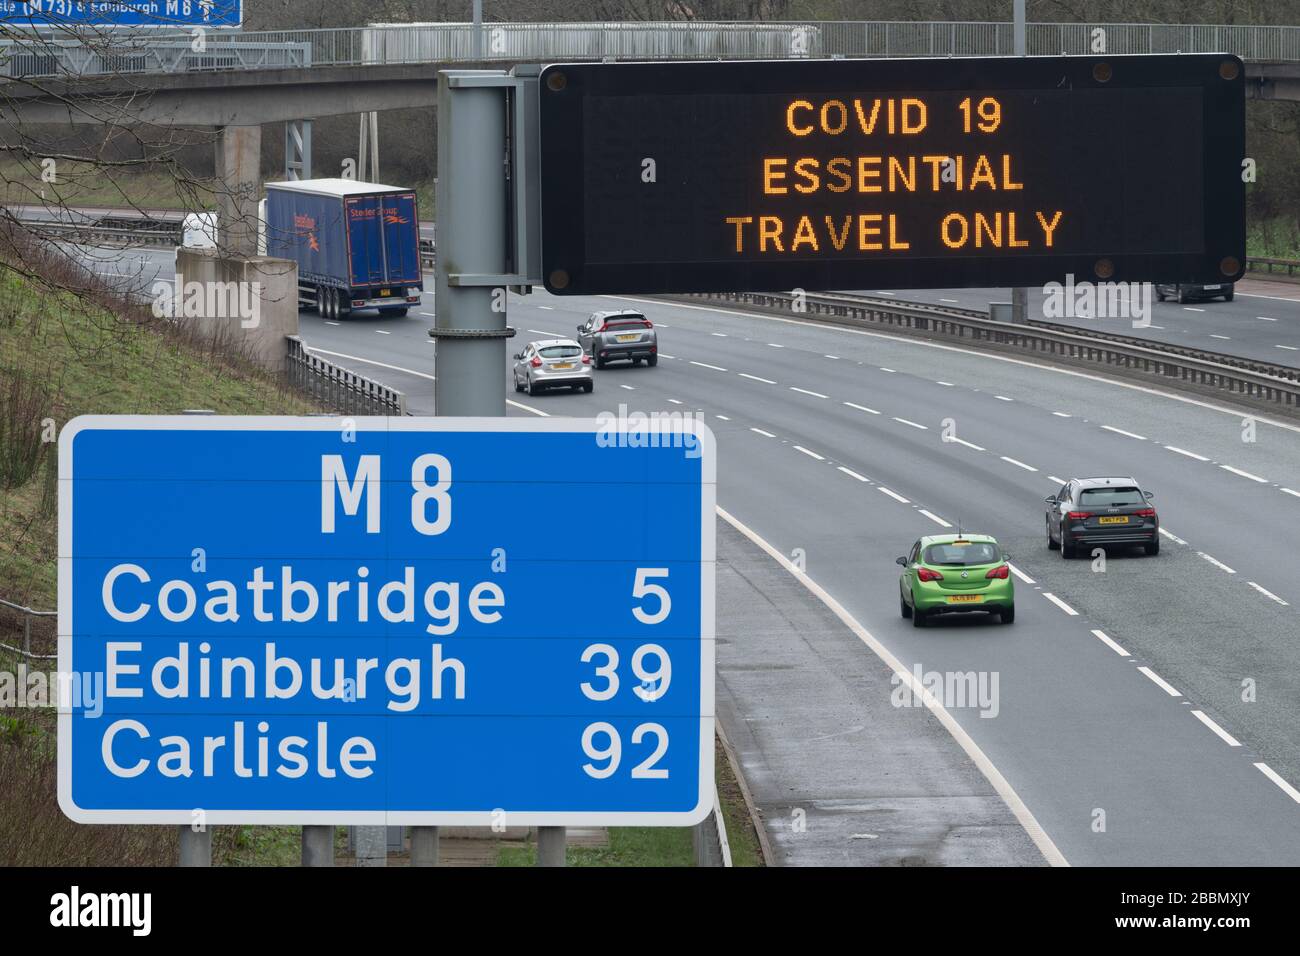 COVID-19 Essential Travel Only sign on M8 motorway, Glasgow, Scotland, UK during Coronavirus pandemic Stock Photo